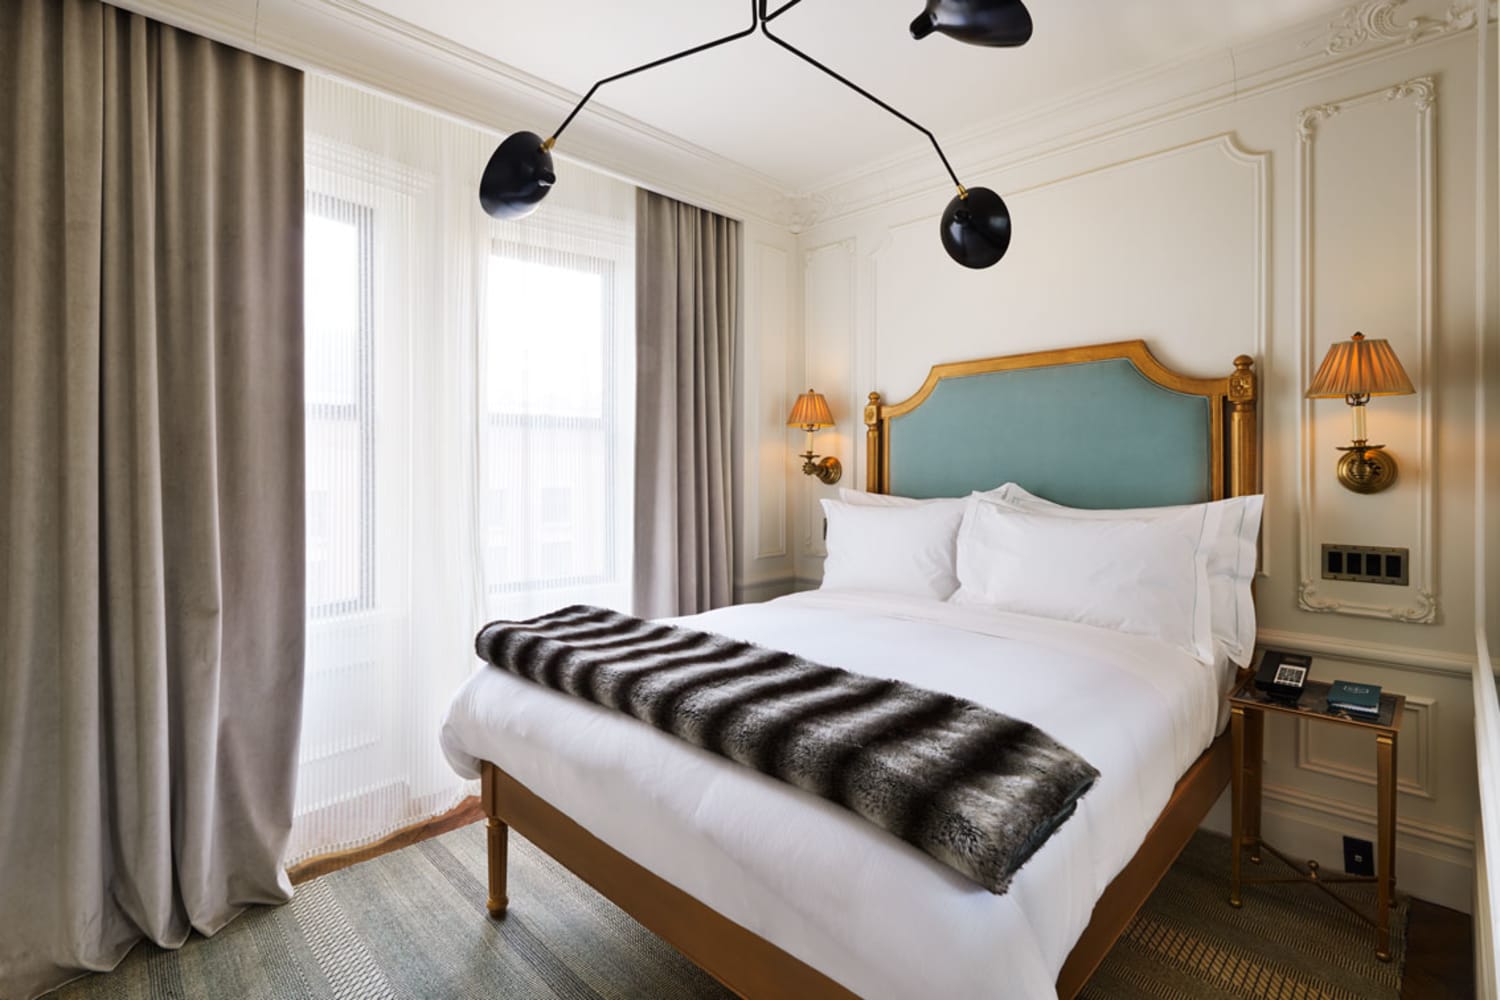 Buy Luxury Hotel Bedding from Marriott Hotels - Microfiber Robe